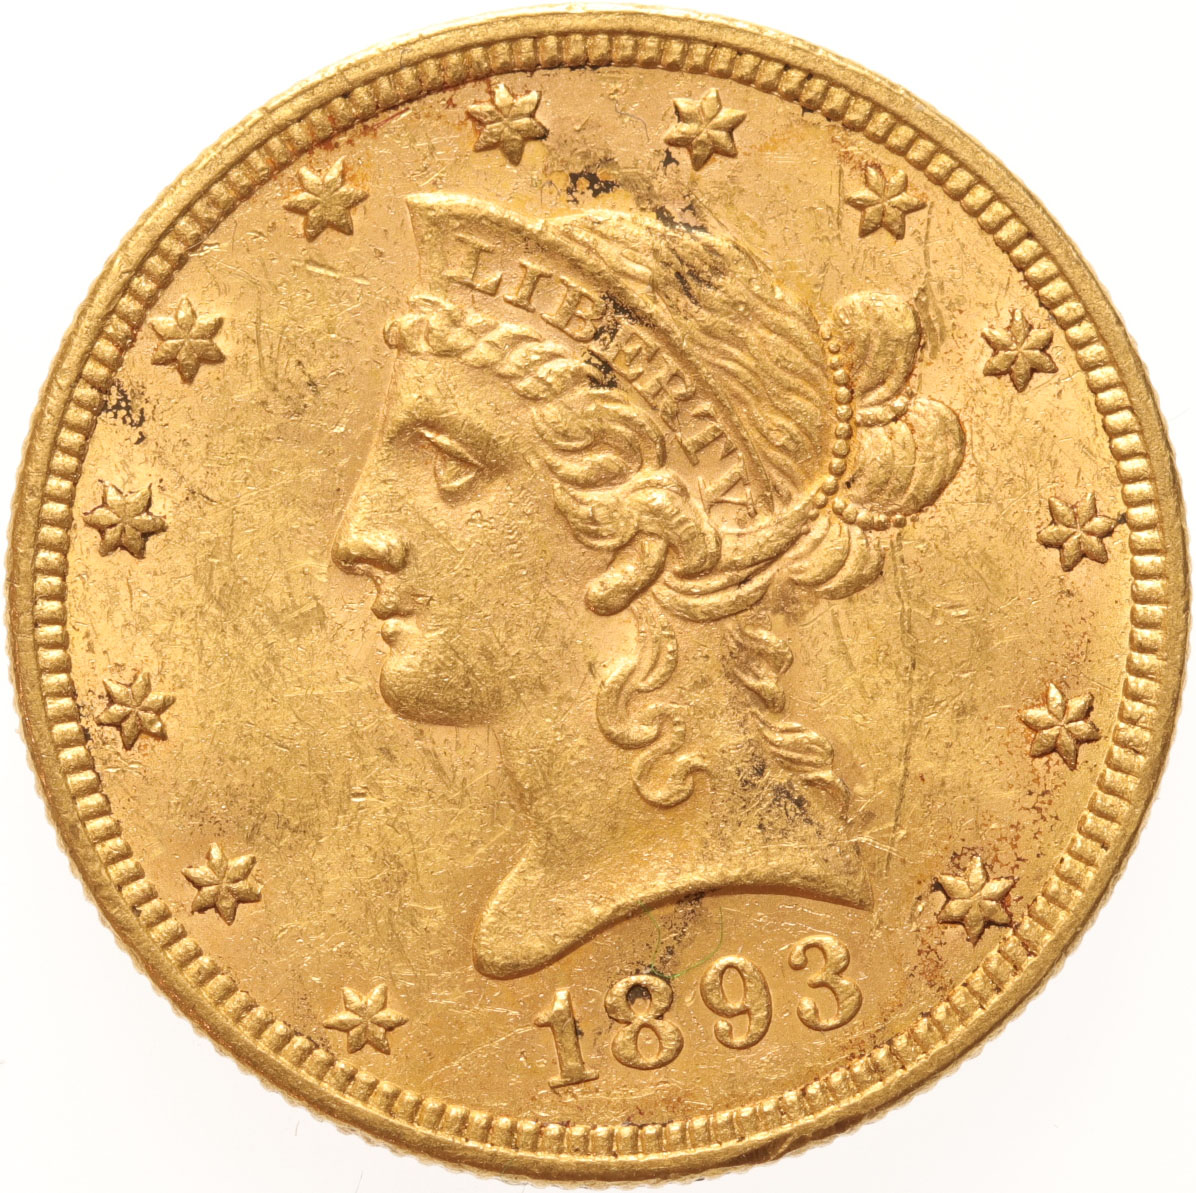 USA 10 dollars 1893